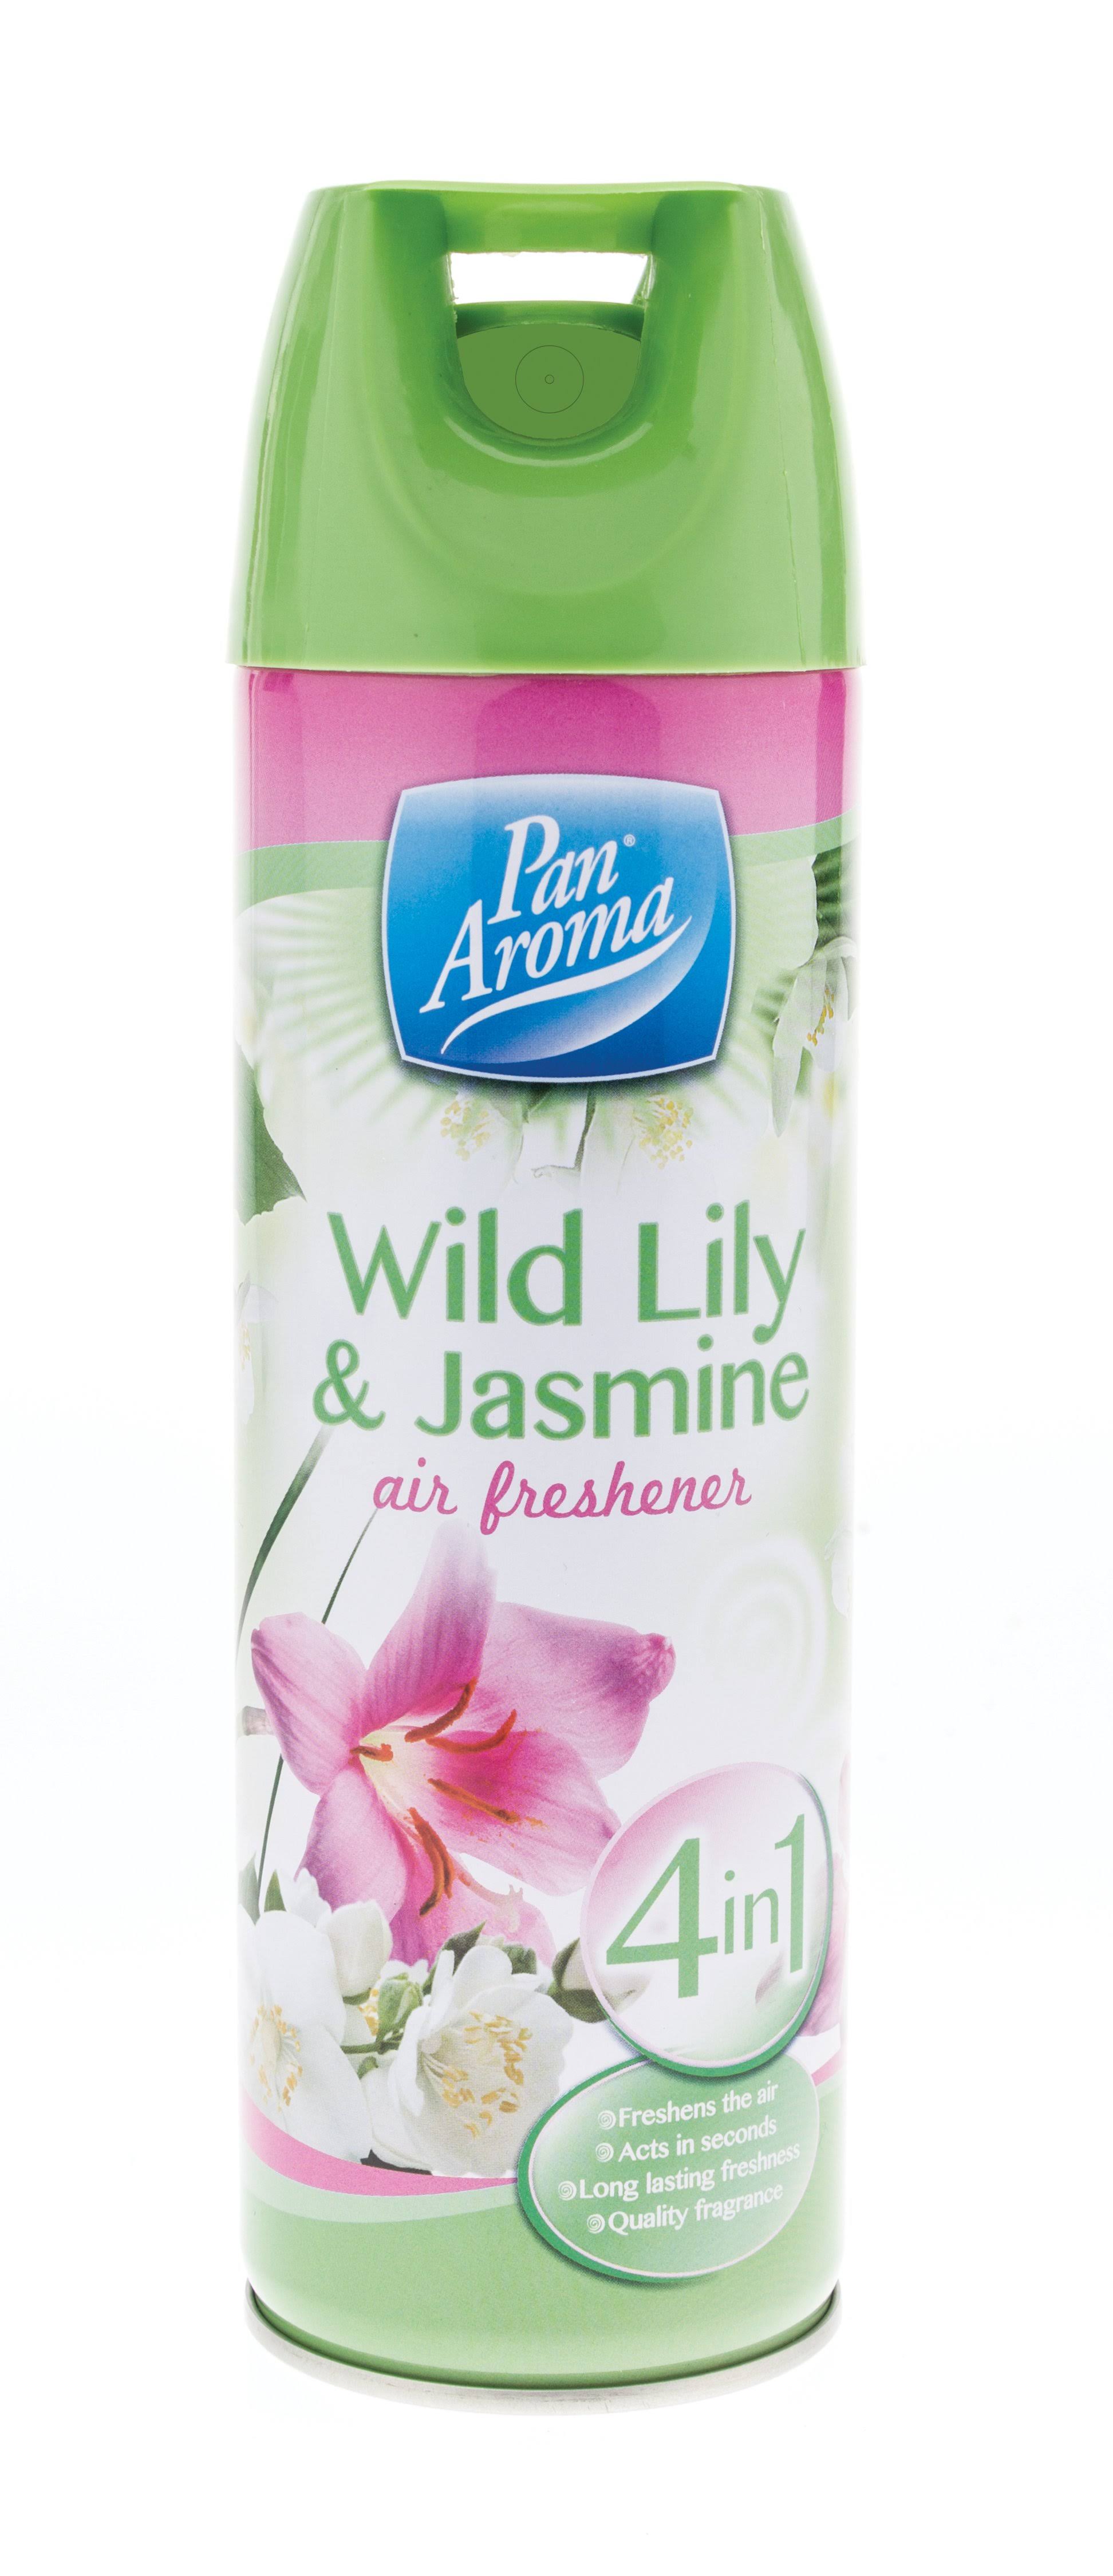 Pan Aroma 4 in 1 Wild Lily and Jasmine Air Freshener - 400ml